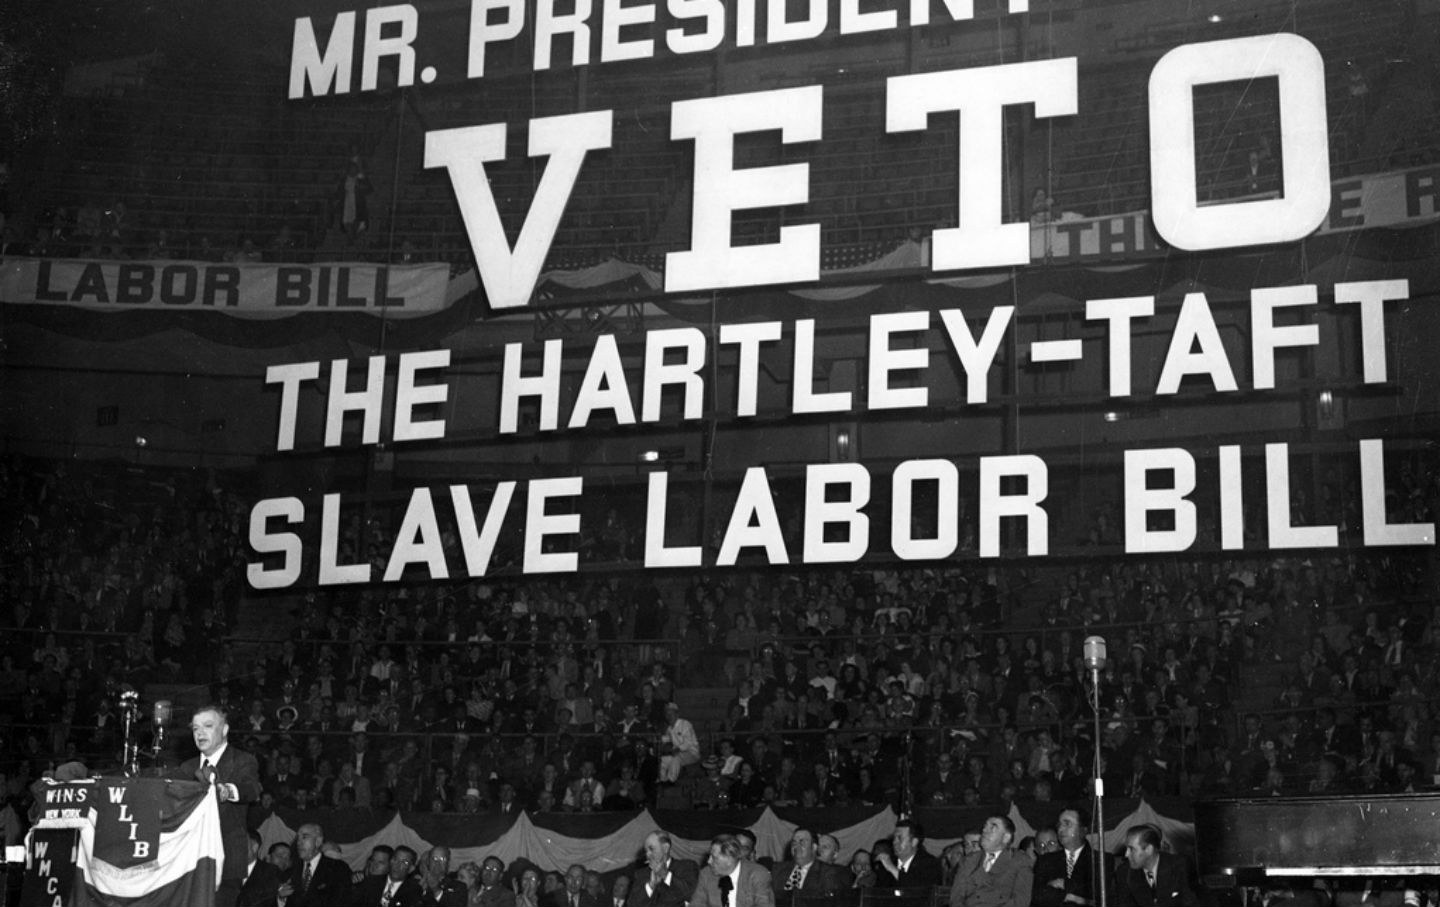 Veto the Hartley-Taft labor bill